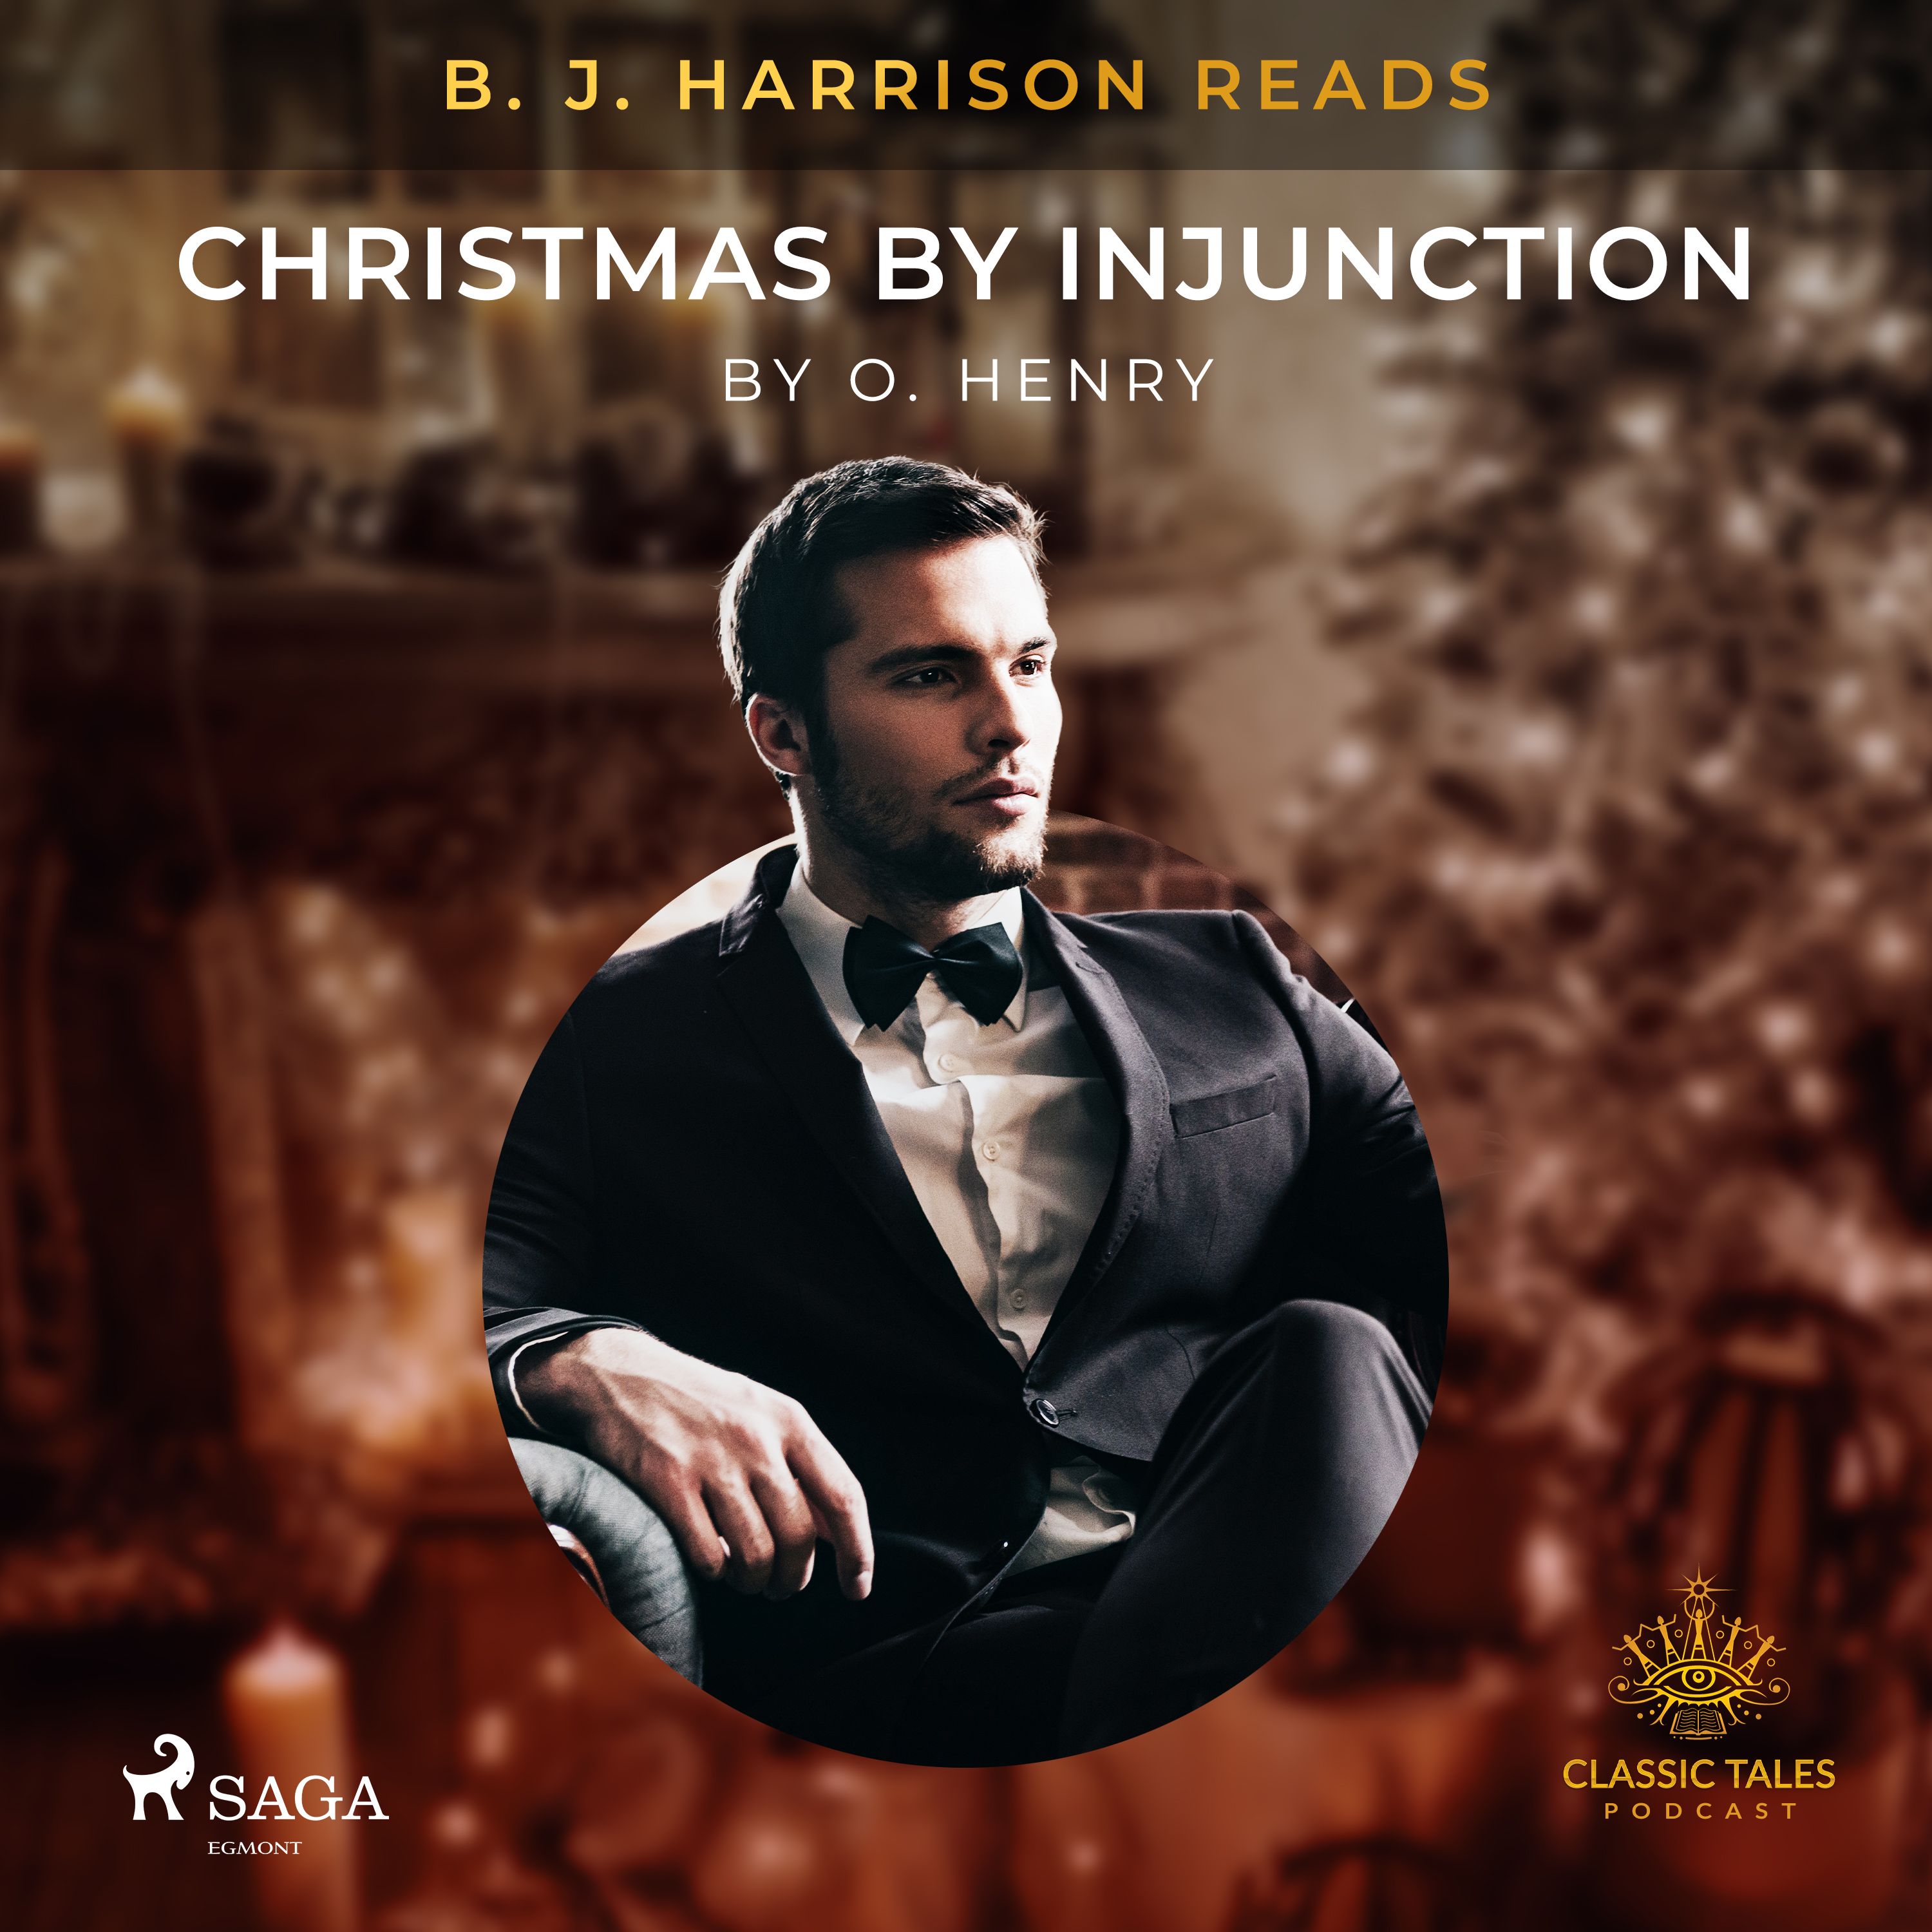 B. J. Harrison Reads Christmas by Injunction, ljudbok av O. Henry